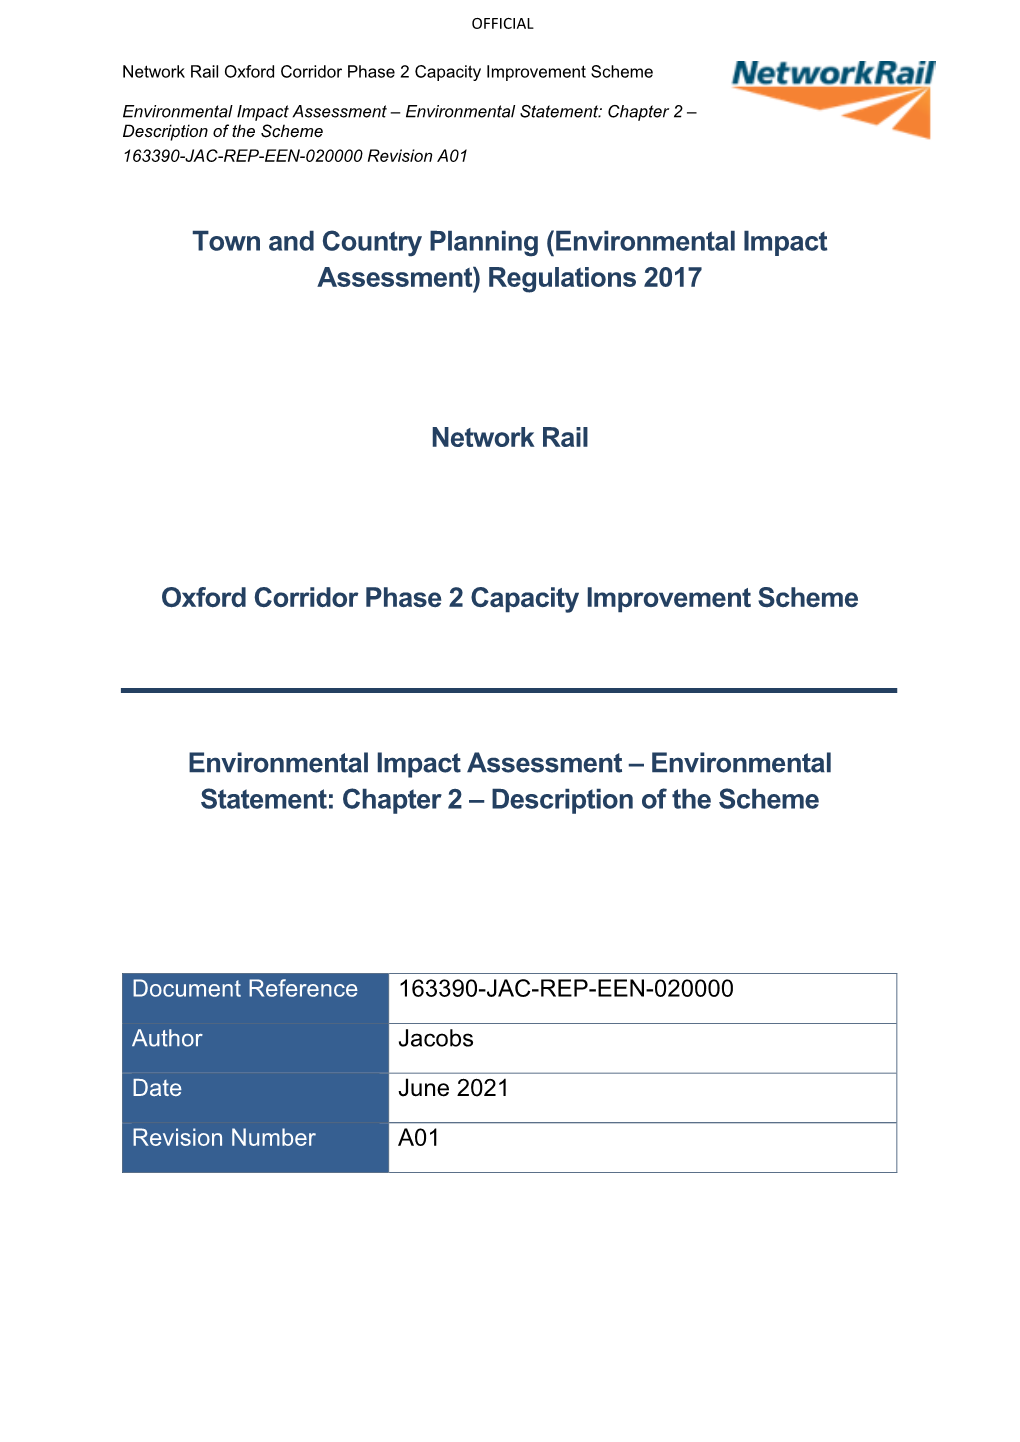 Environmental Impact Assessment – Environmental Statement: Chapter 2 – Description of the Scheme 163390-JAC-REP-EEN-020000 Revision A01